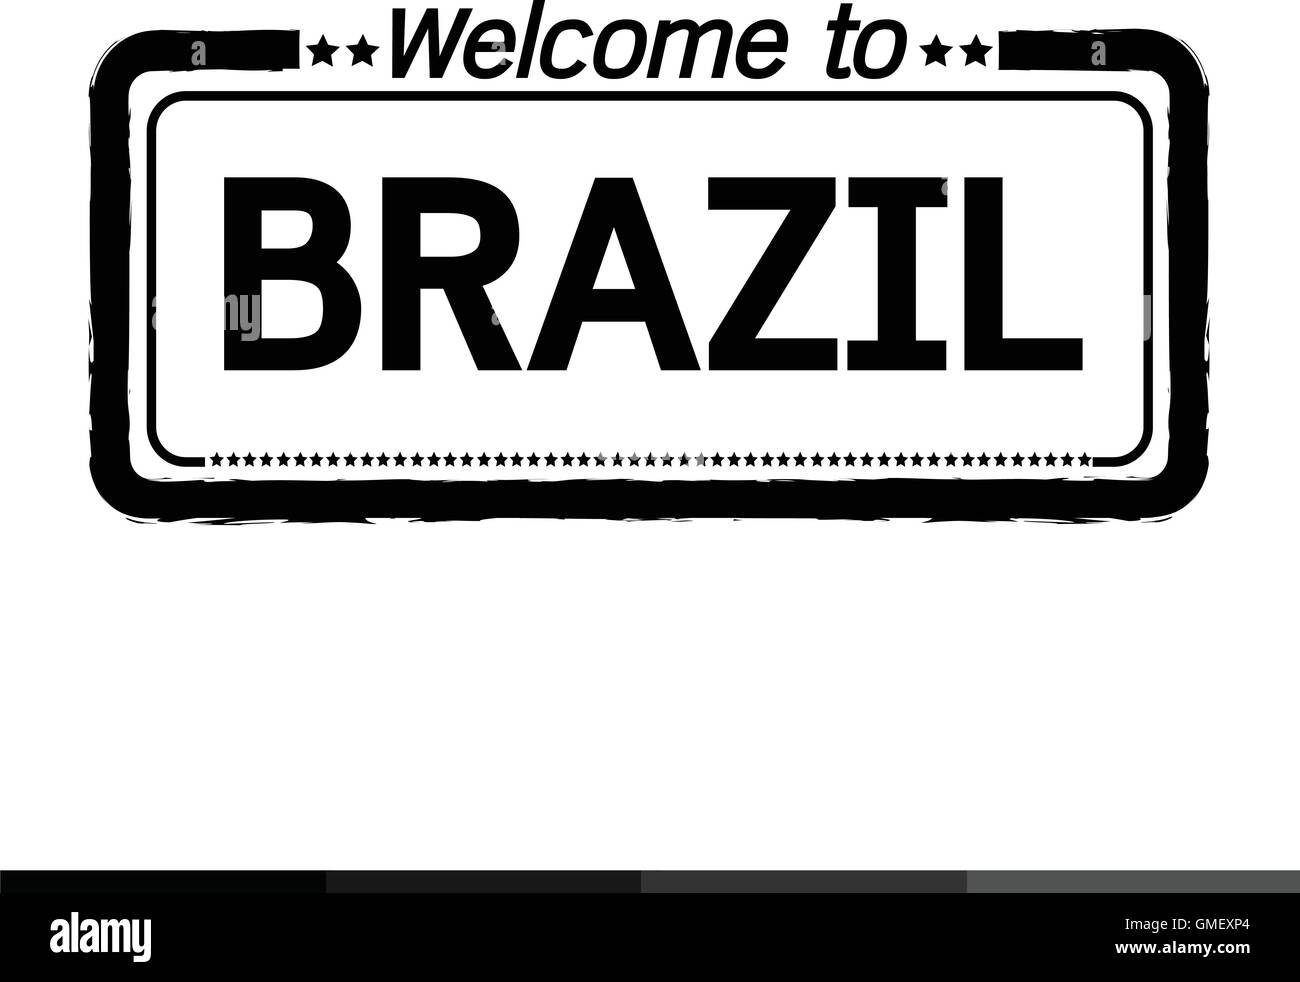 Welcome to BRAZIL illustration design Stock Vector